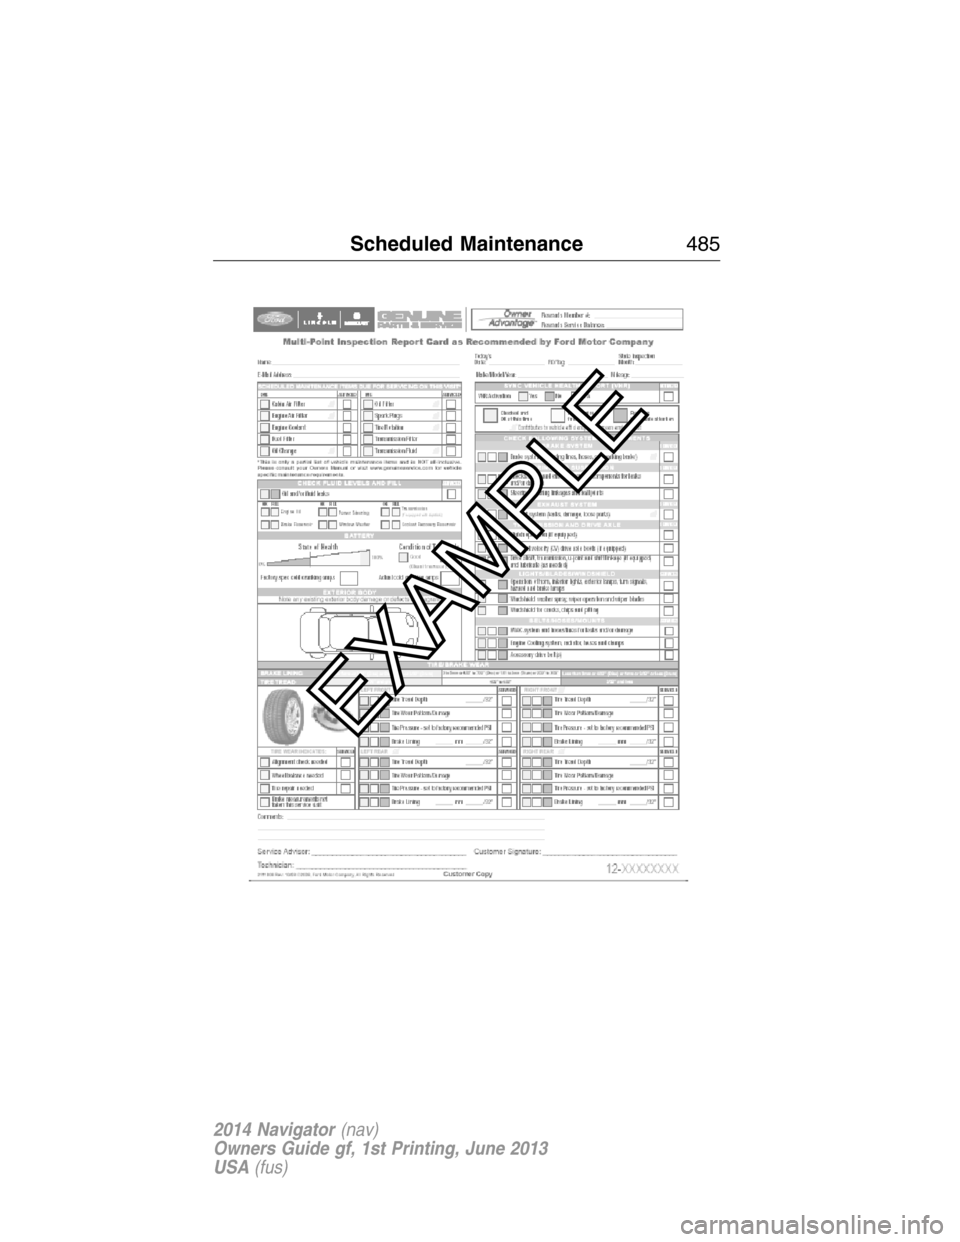 LINCOLN NAVIGATOR 2014 Owners Manual Scheduled Maintenance485
2014 Navigator(nav)
Owners Guide gf, 1st Printing, June 2013
USA(fus) 